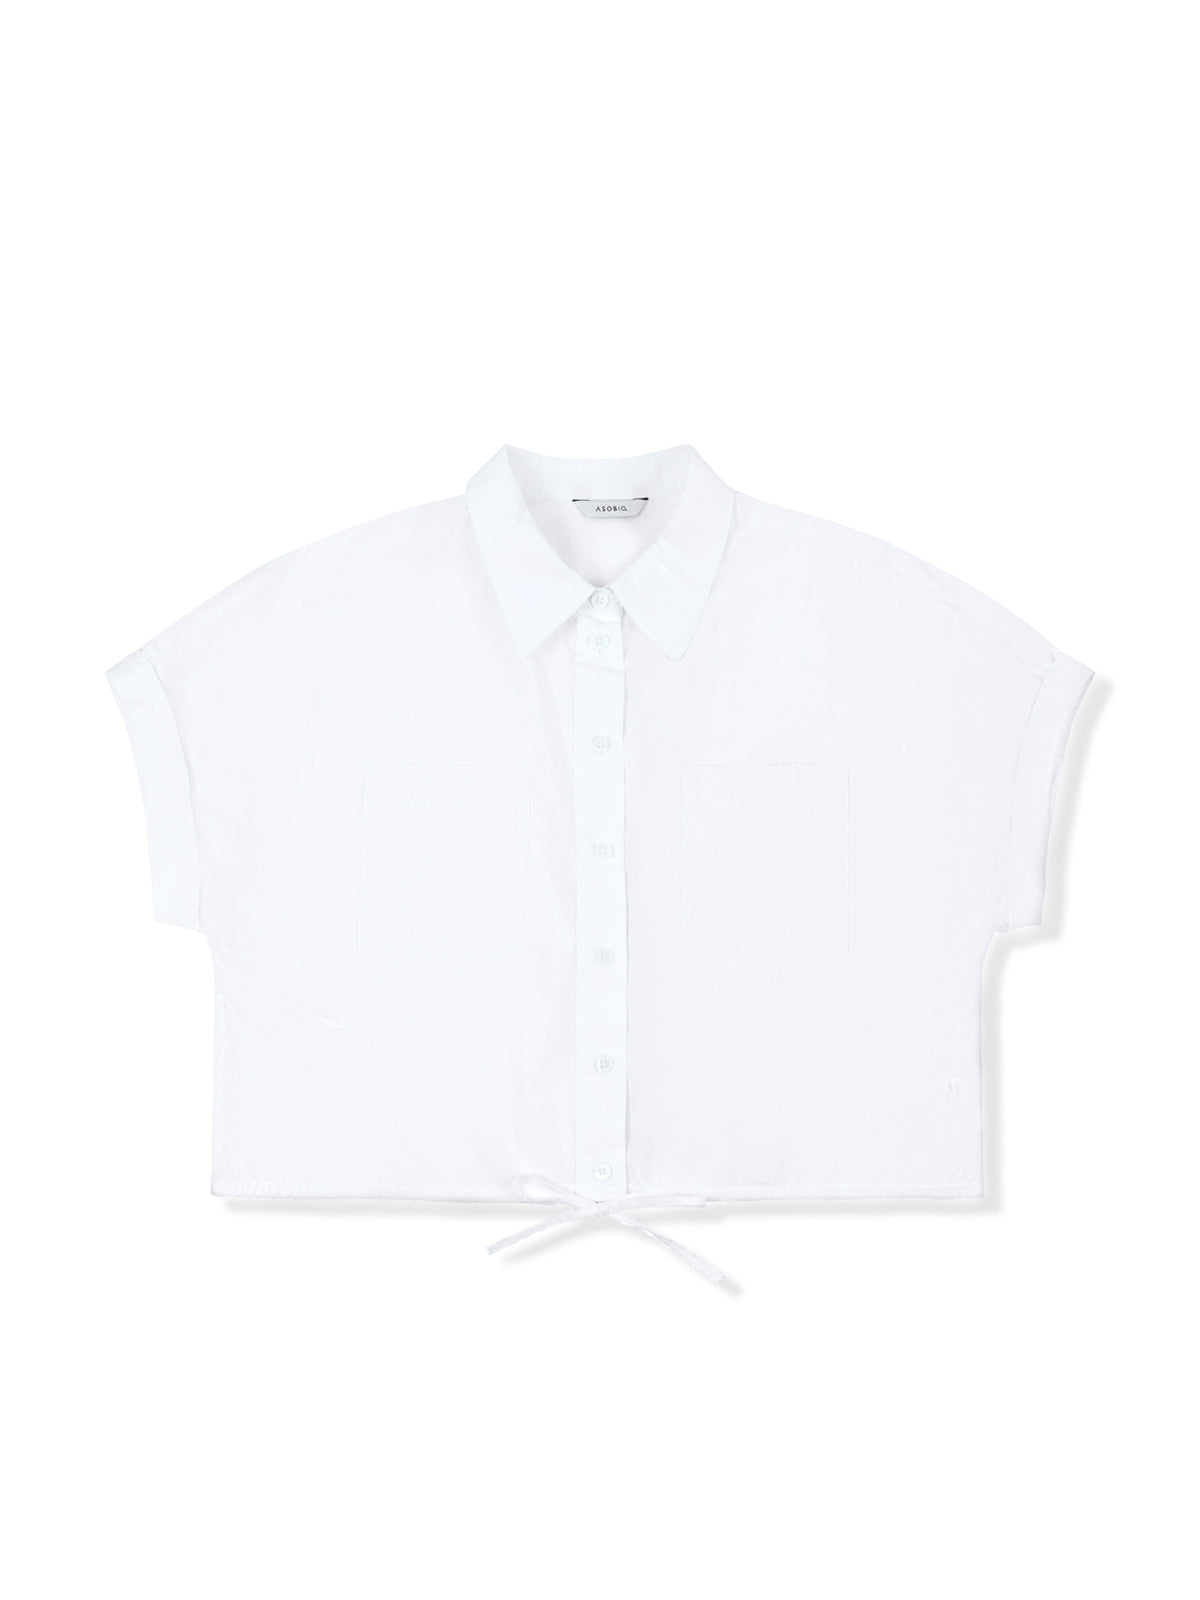 Raglan Sleeve Polka Dot Print Shirt